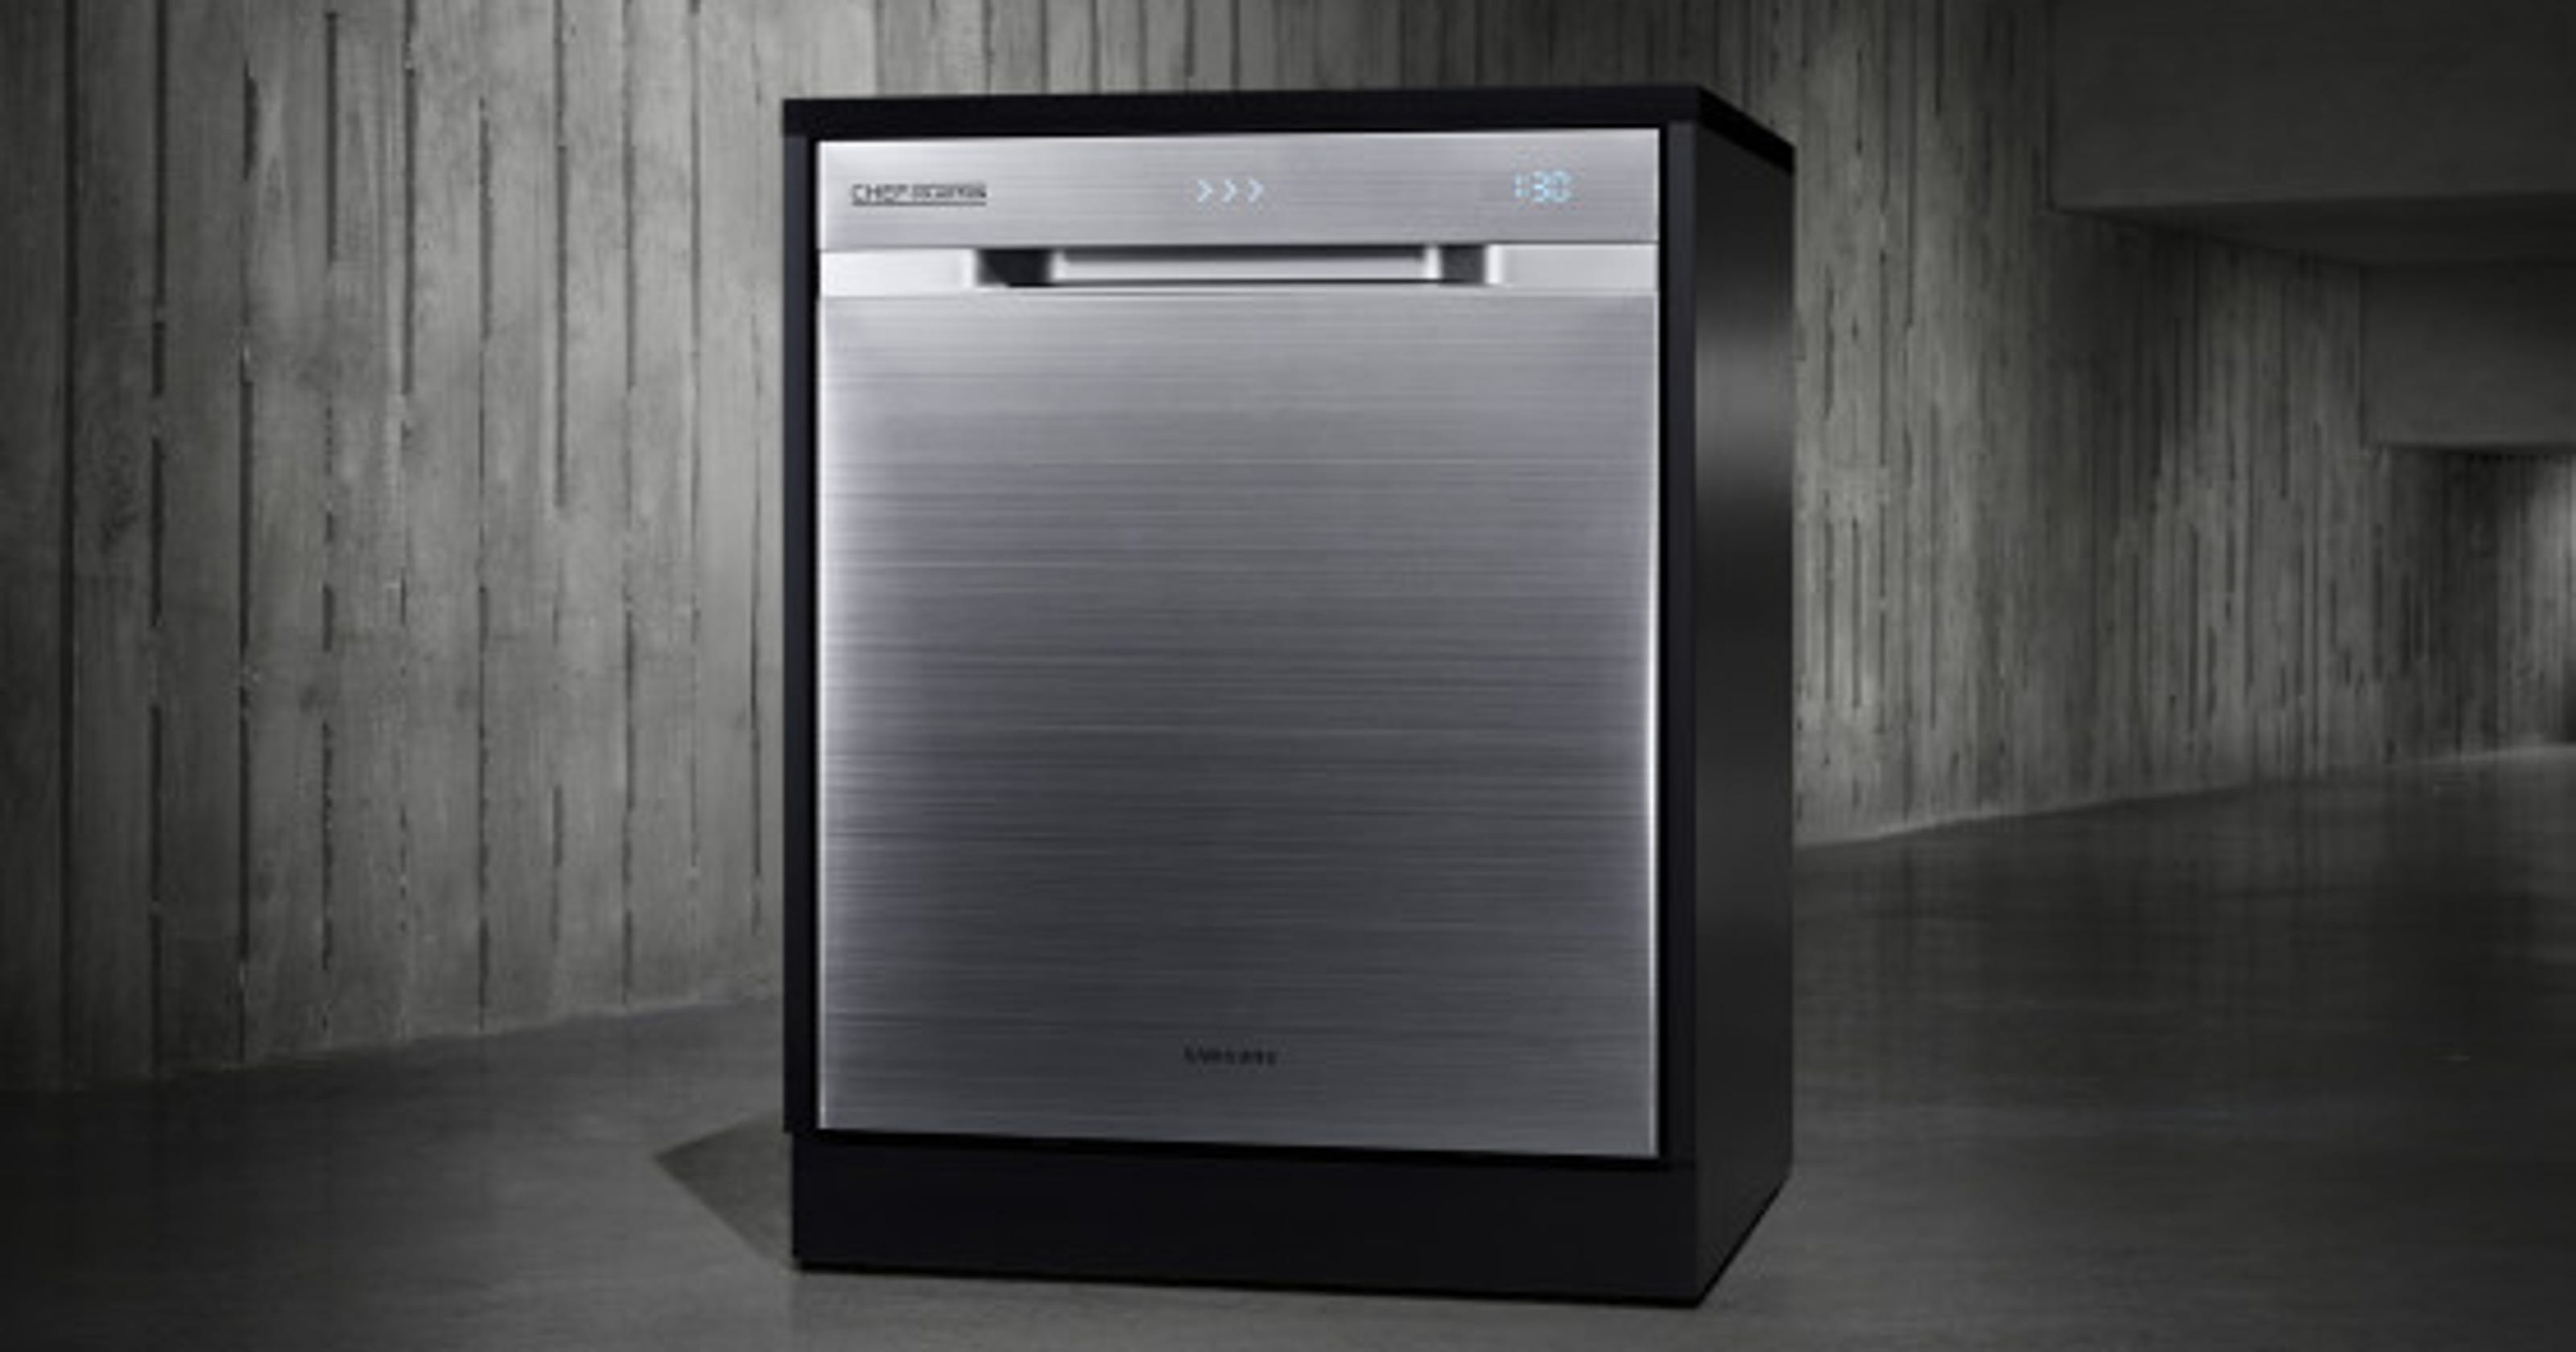 CES 2014 Samsung revolutionizes the dishwasher